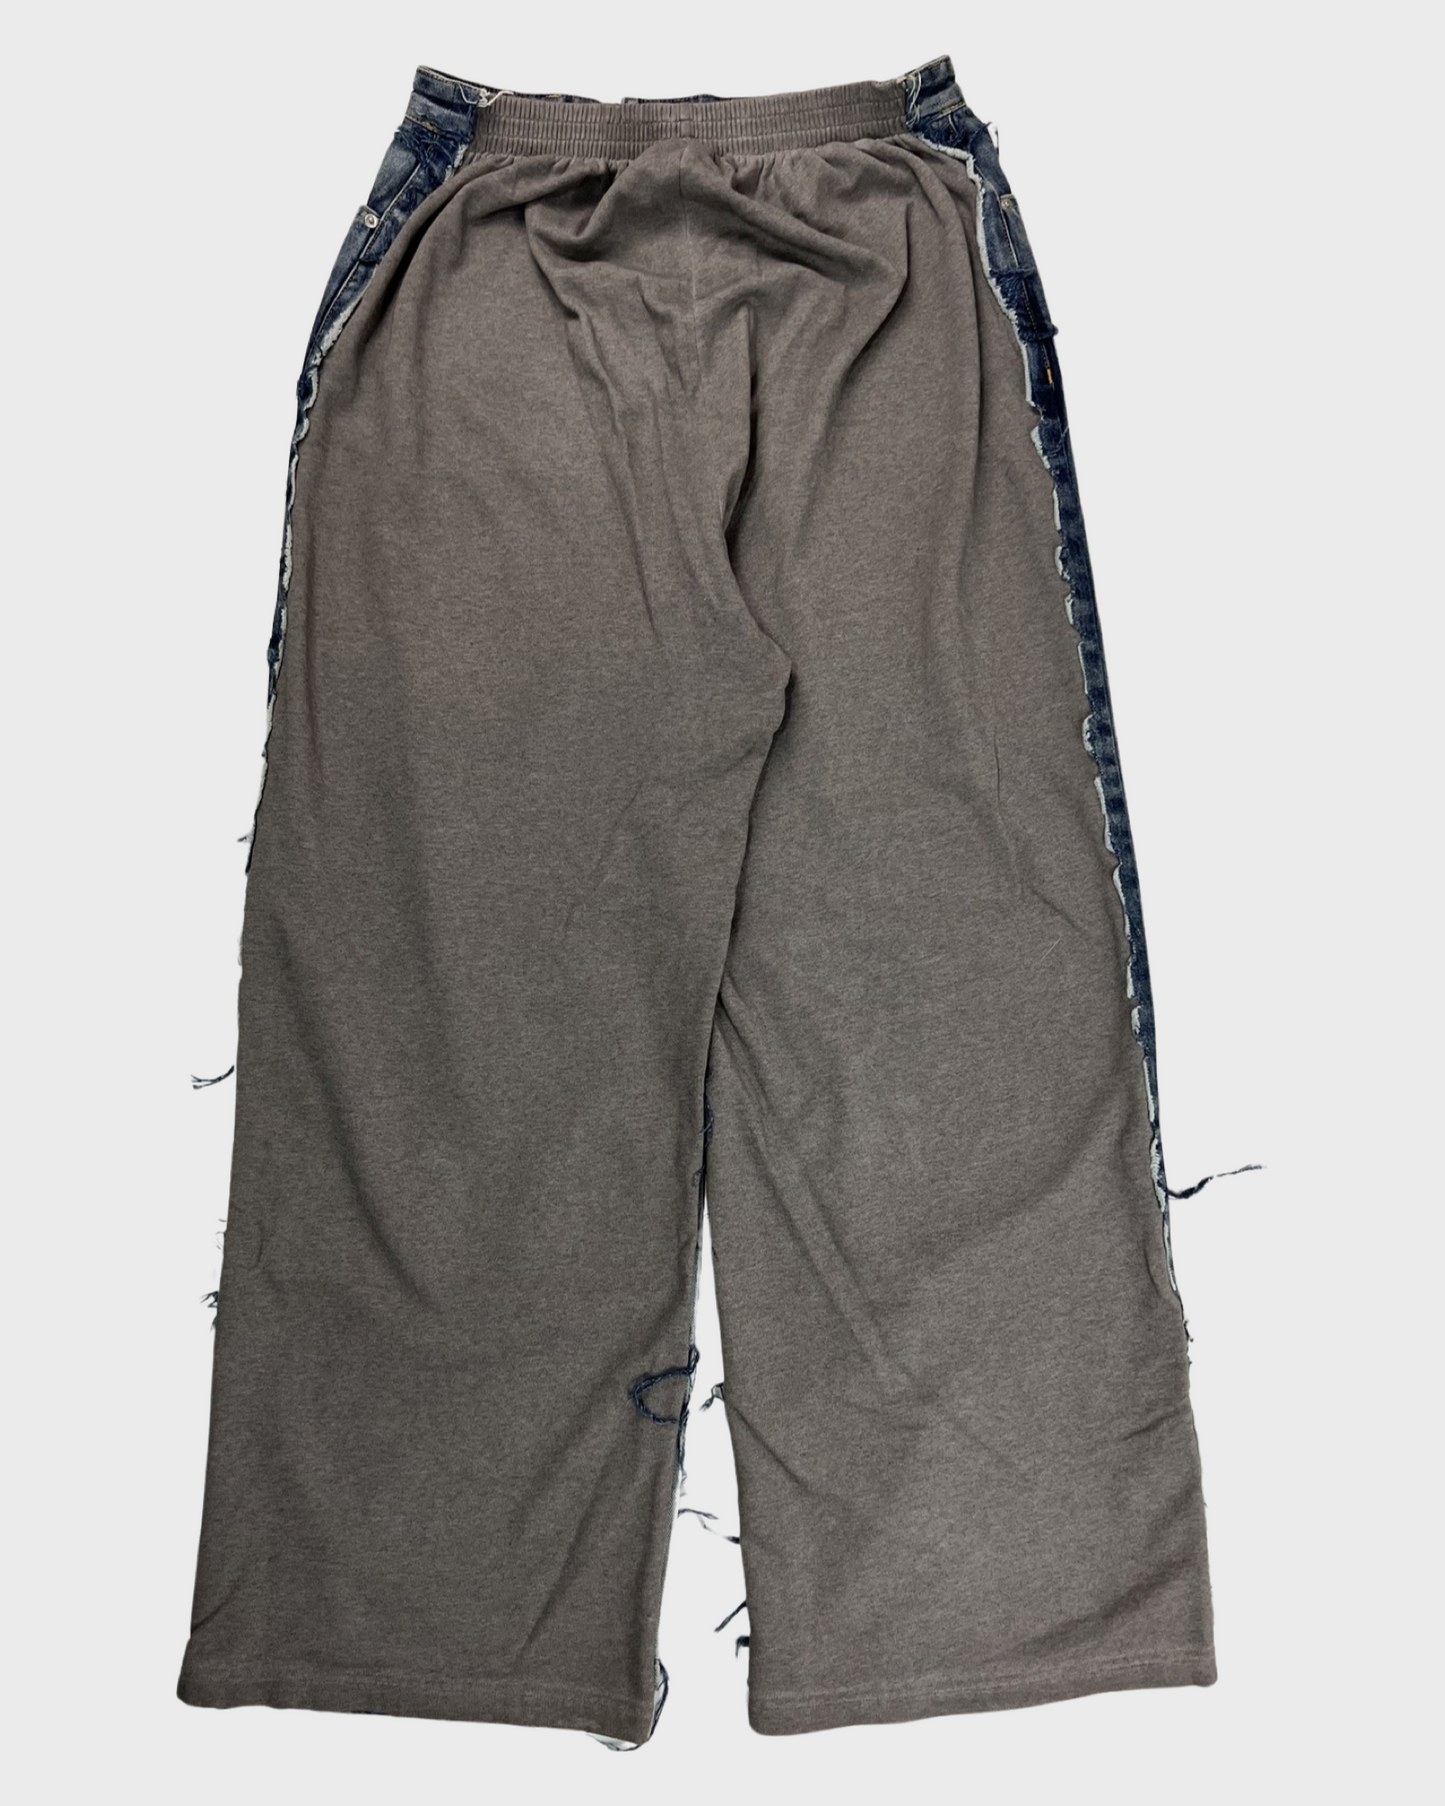 Balenciaga SS23 mudshow hybrid Jeans/ grey Sweatpants SZ:L